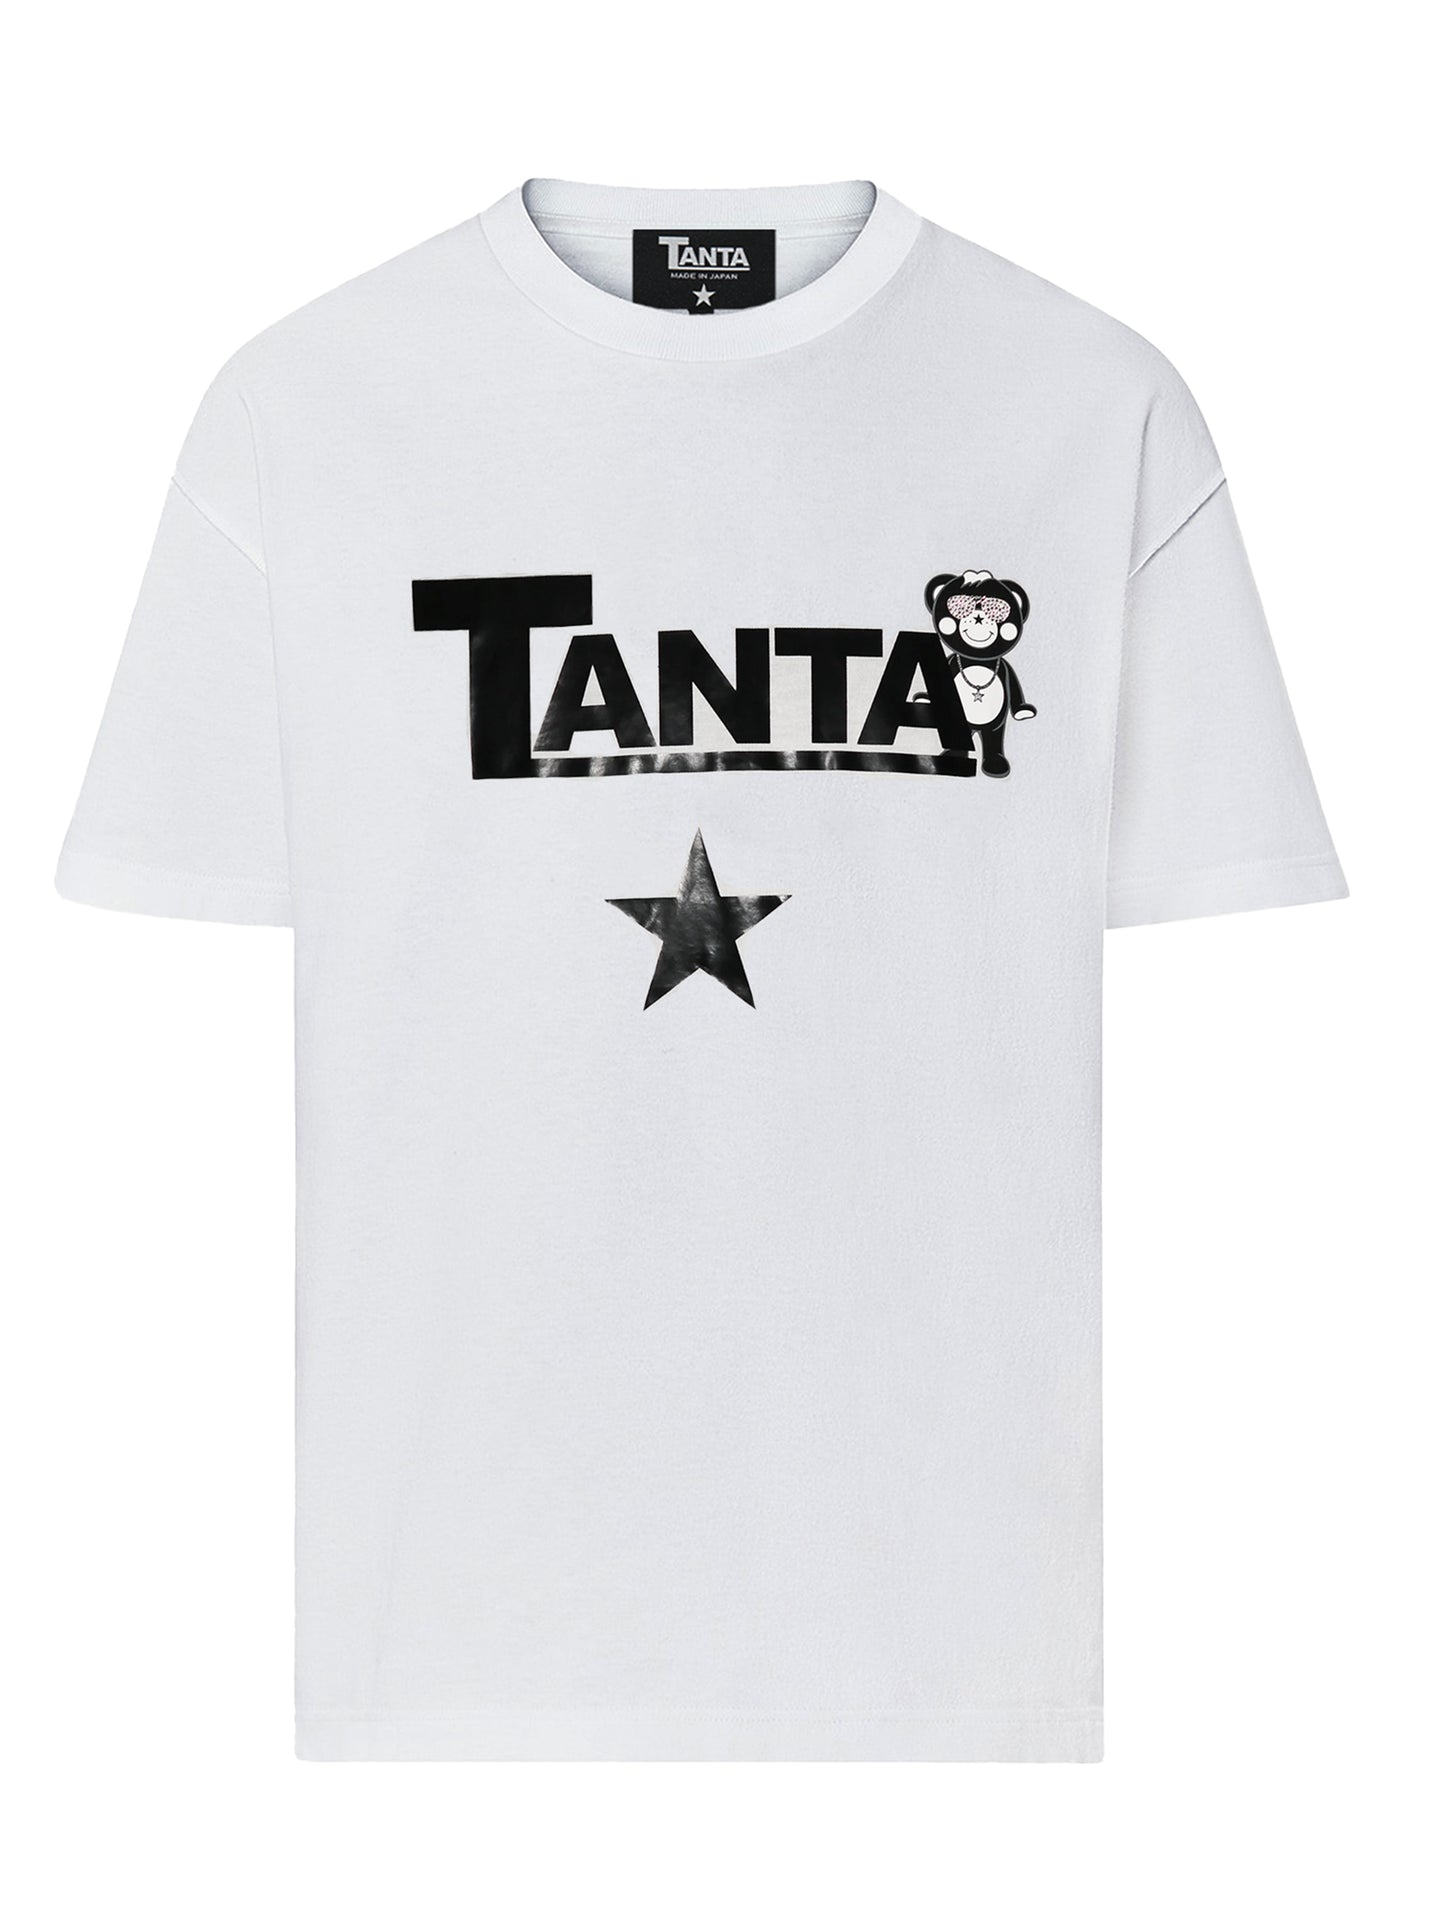 TANTA Logo Lil' Chappy T-shirt